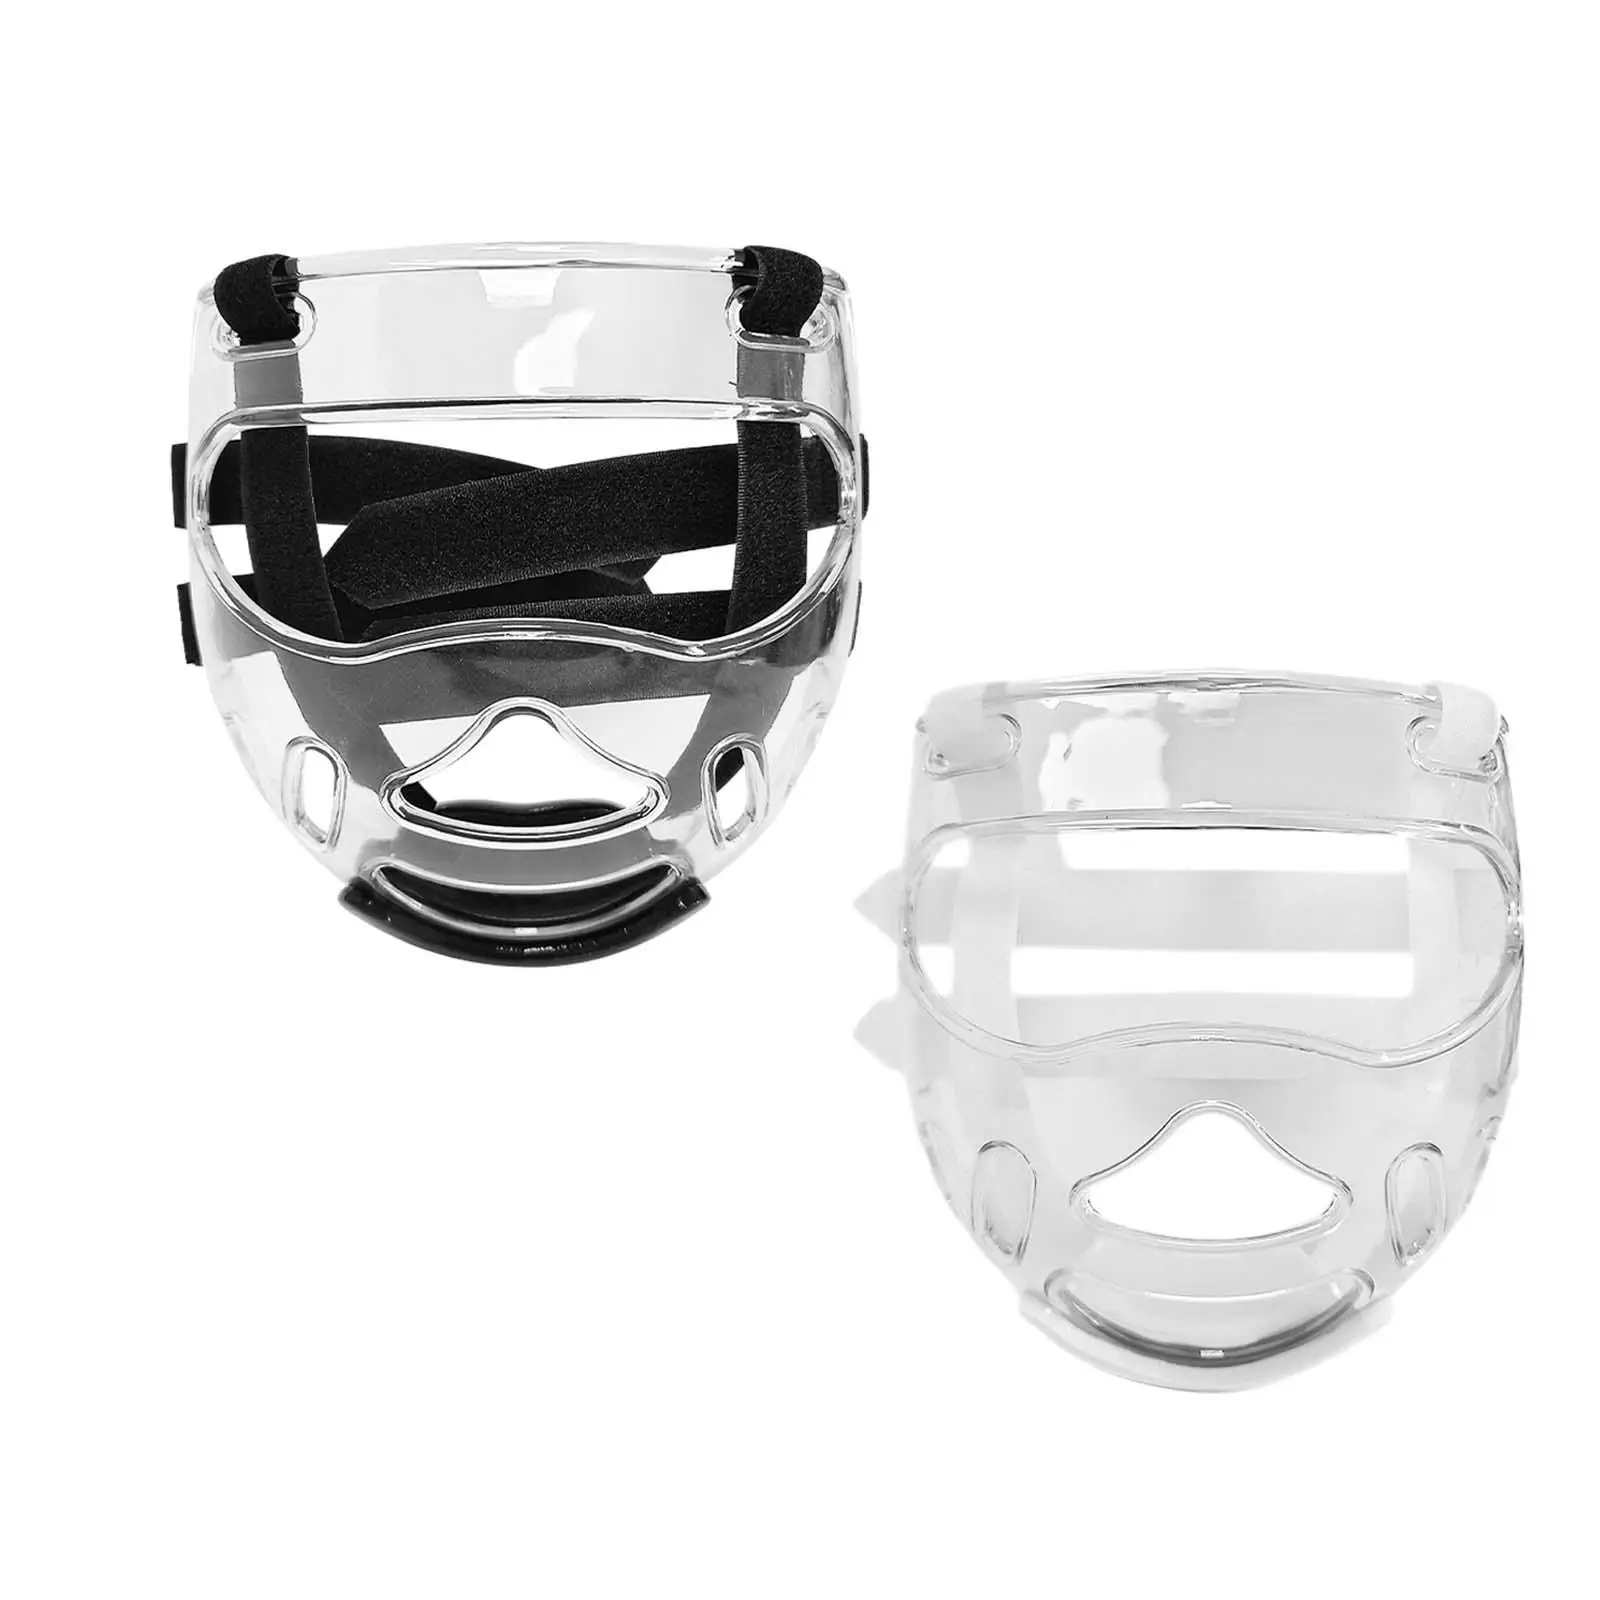 Taekwondo Mask Taekwondo Face Shield Portable Taekwondo Sparring Mask for Kickboxing Fighting Boxin Muay Thai Training Equipment